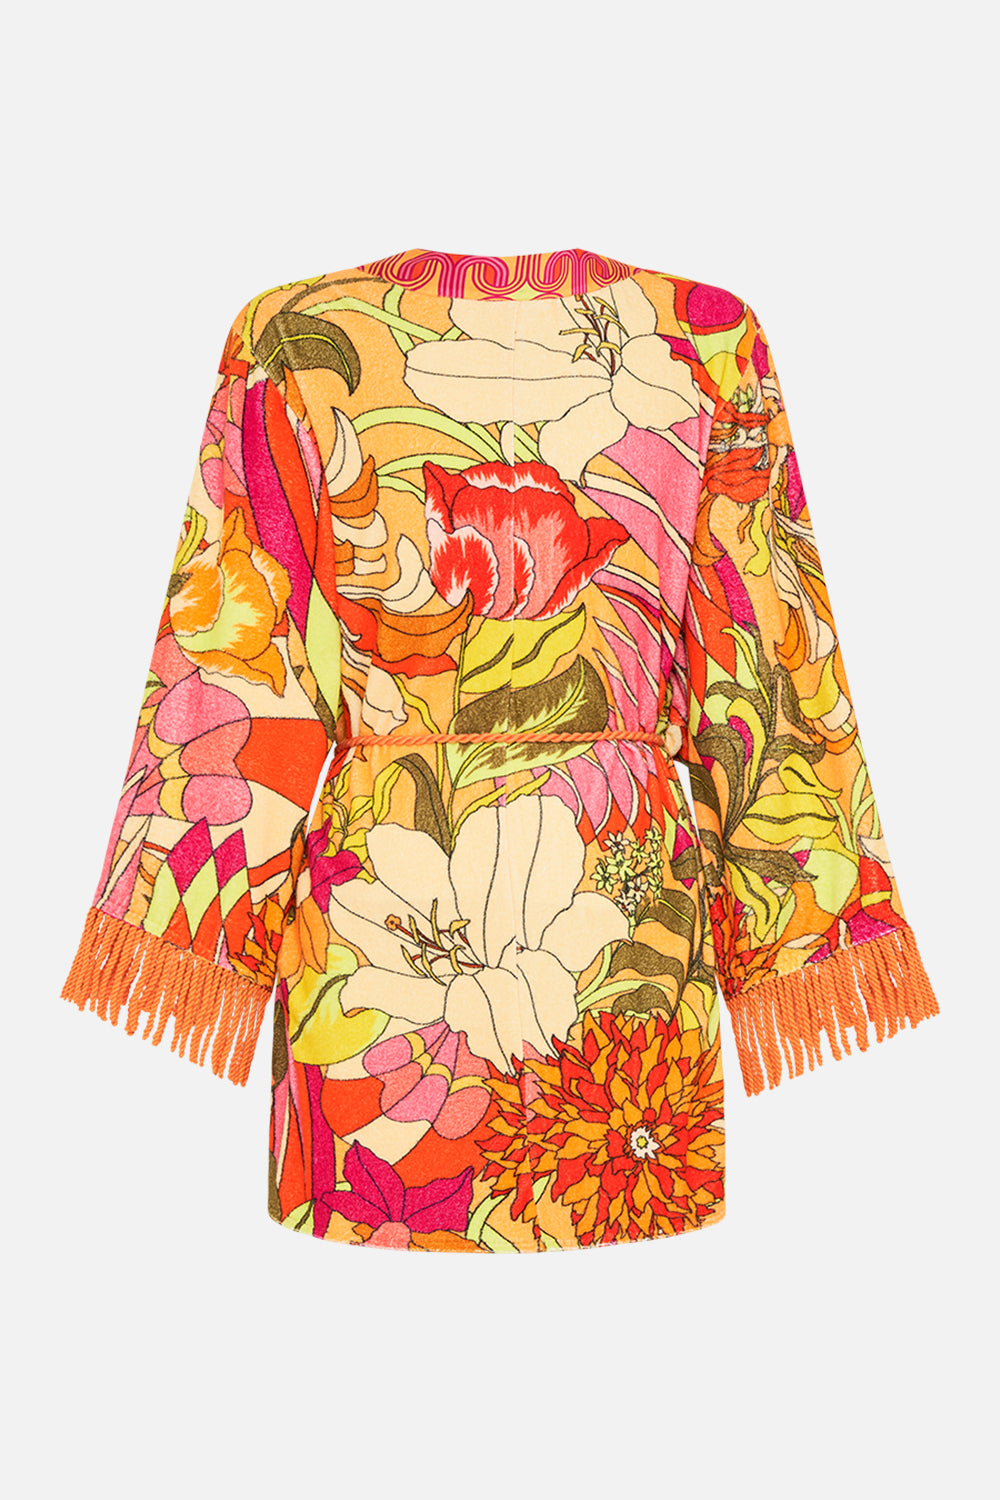 CAMILLA Floral Short Kimono Wrap in The Flower Child Society print